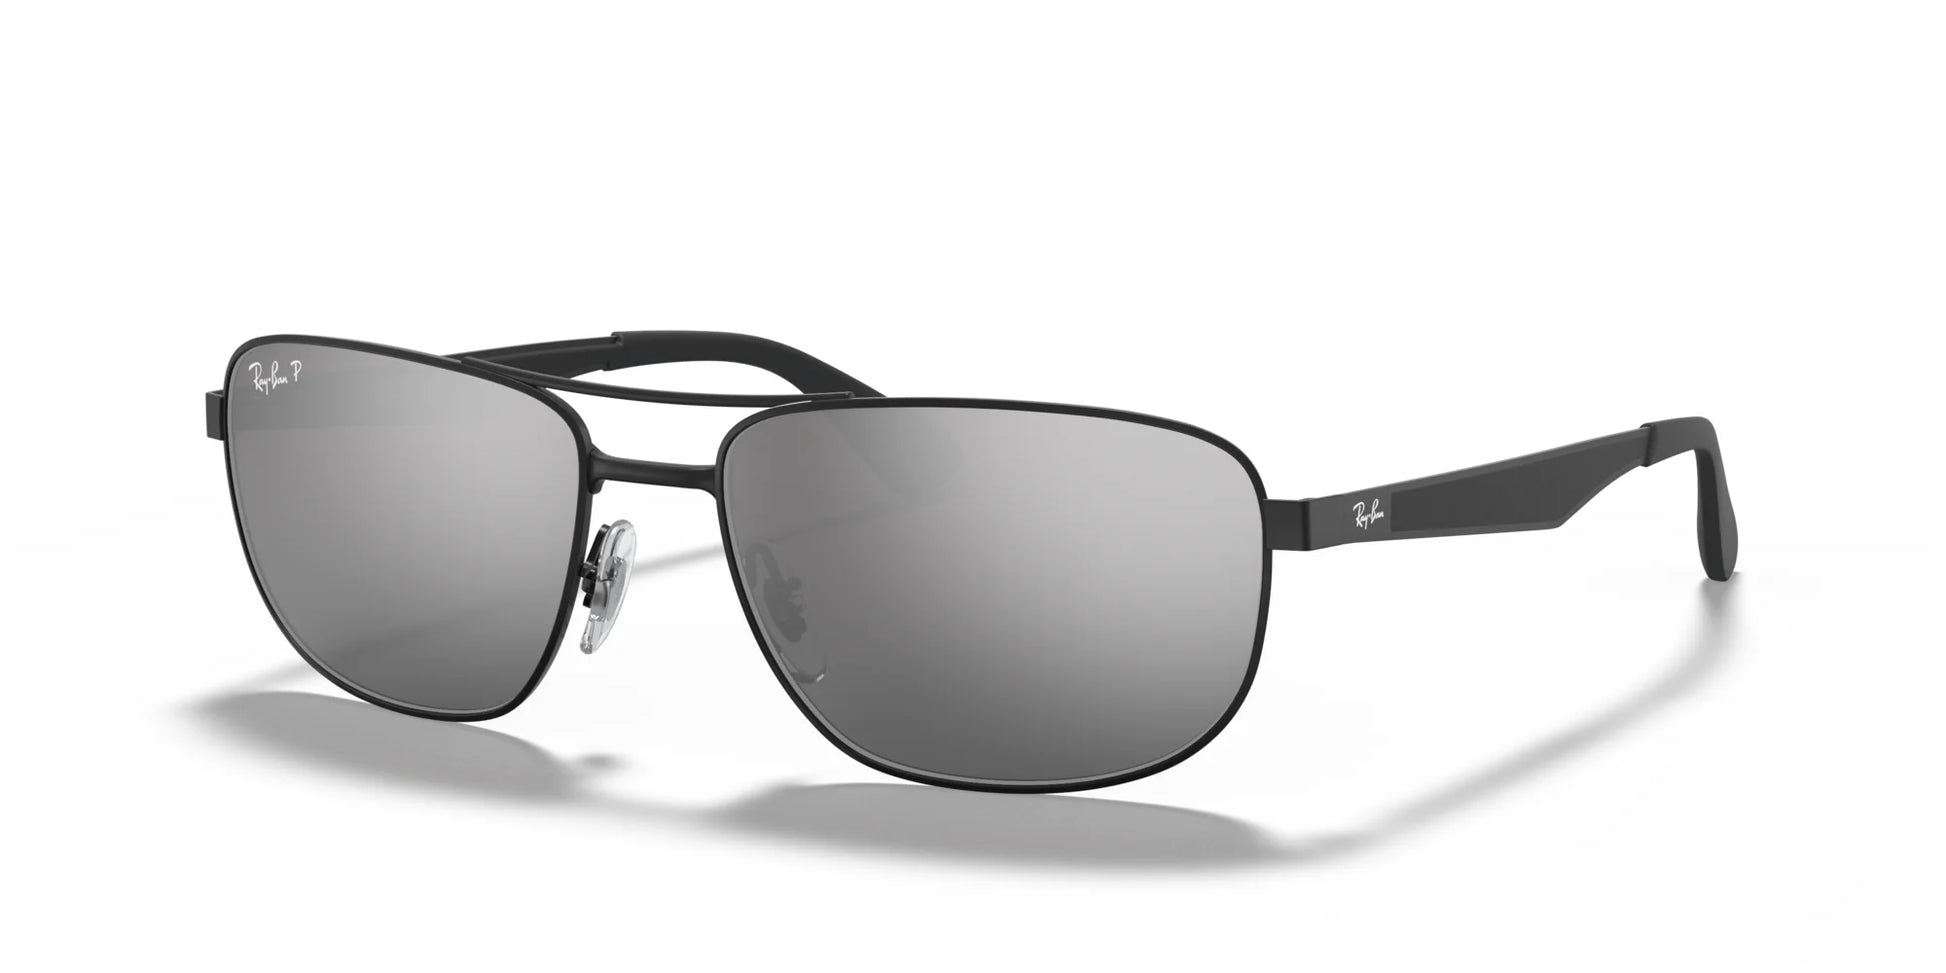 Ray-Ban RB3528 Sunglasses Black / Silver (Polarized)